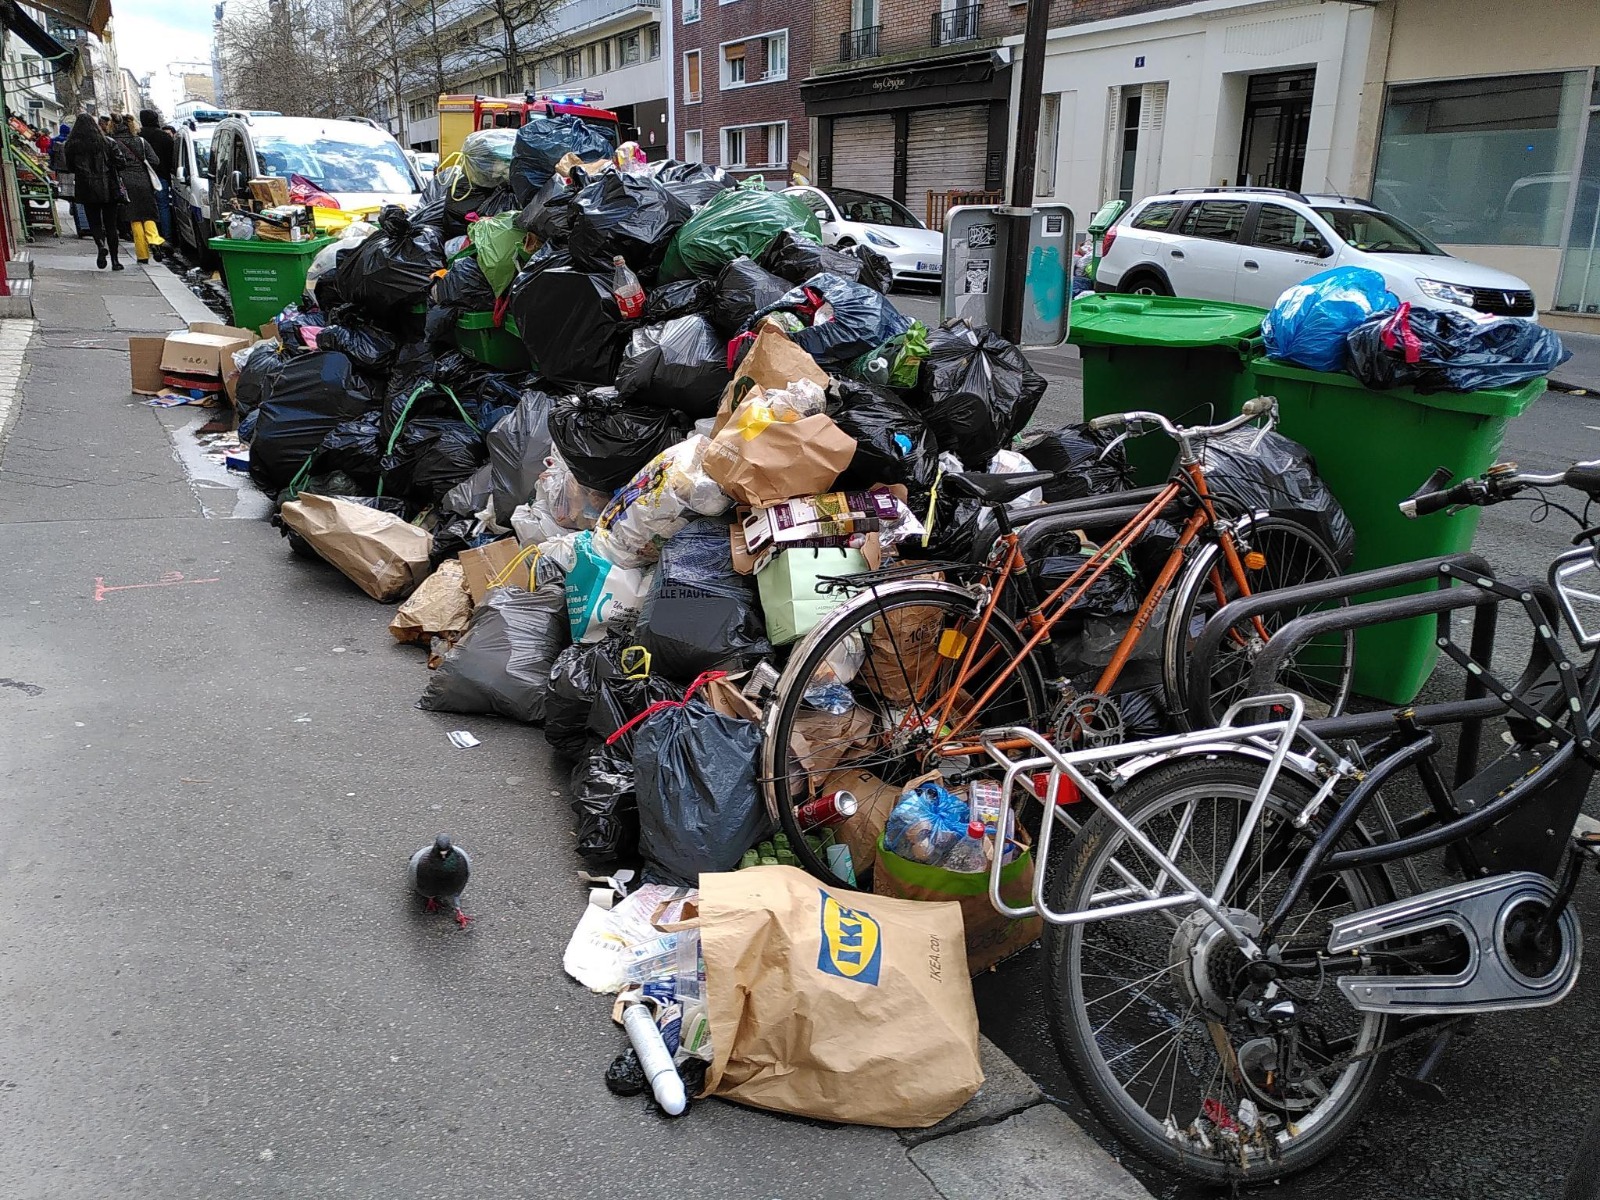 Müll stapelt sich in Paris, Frankreich Pensionsreform Protest 19.3